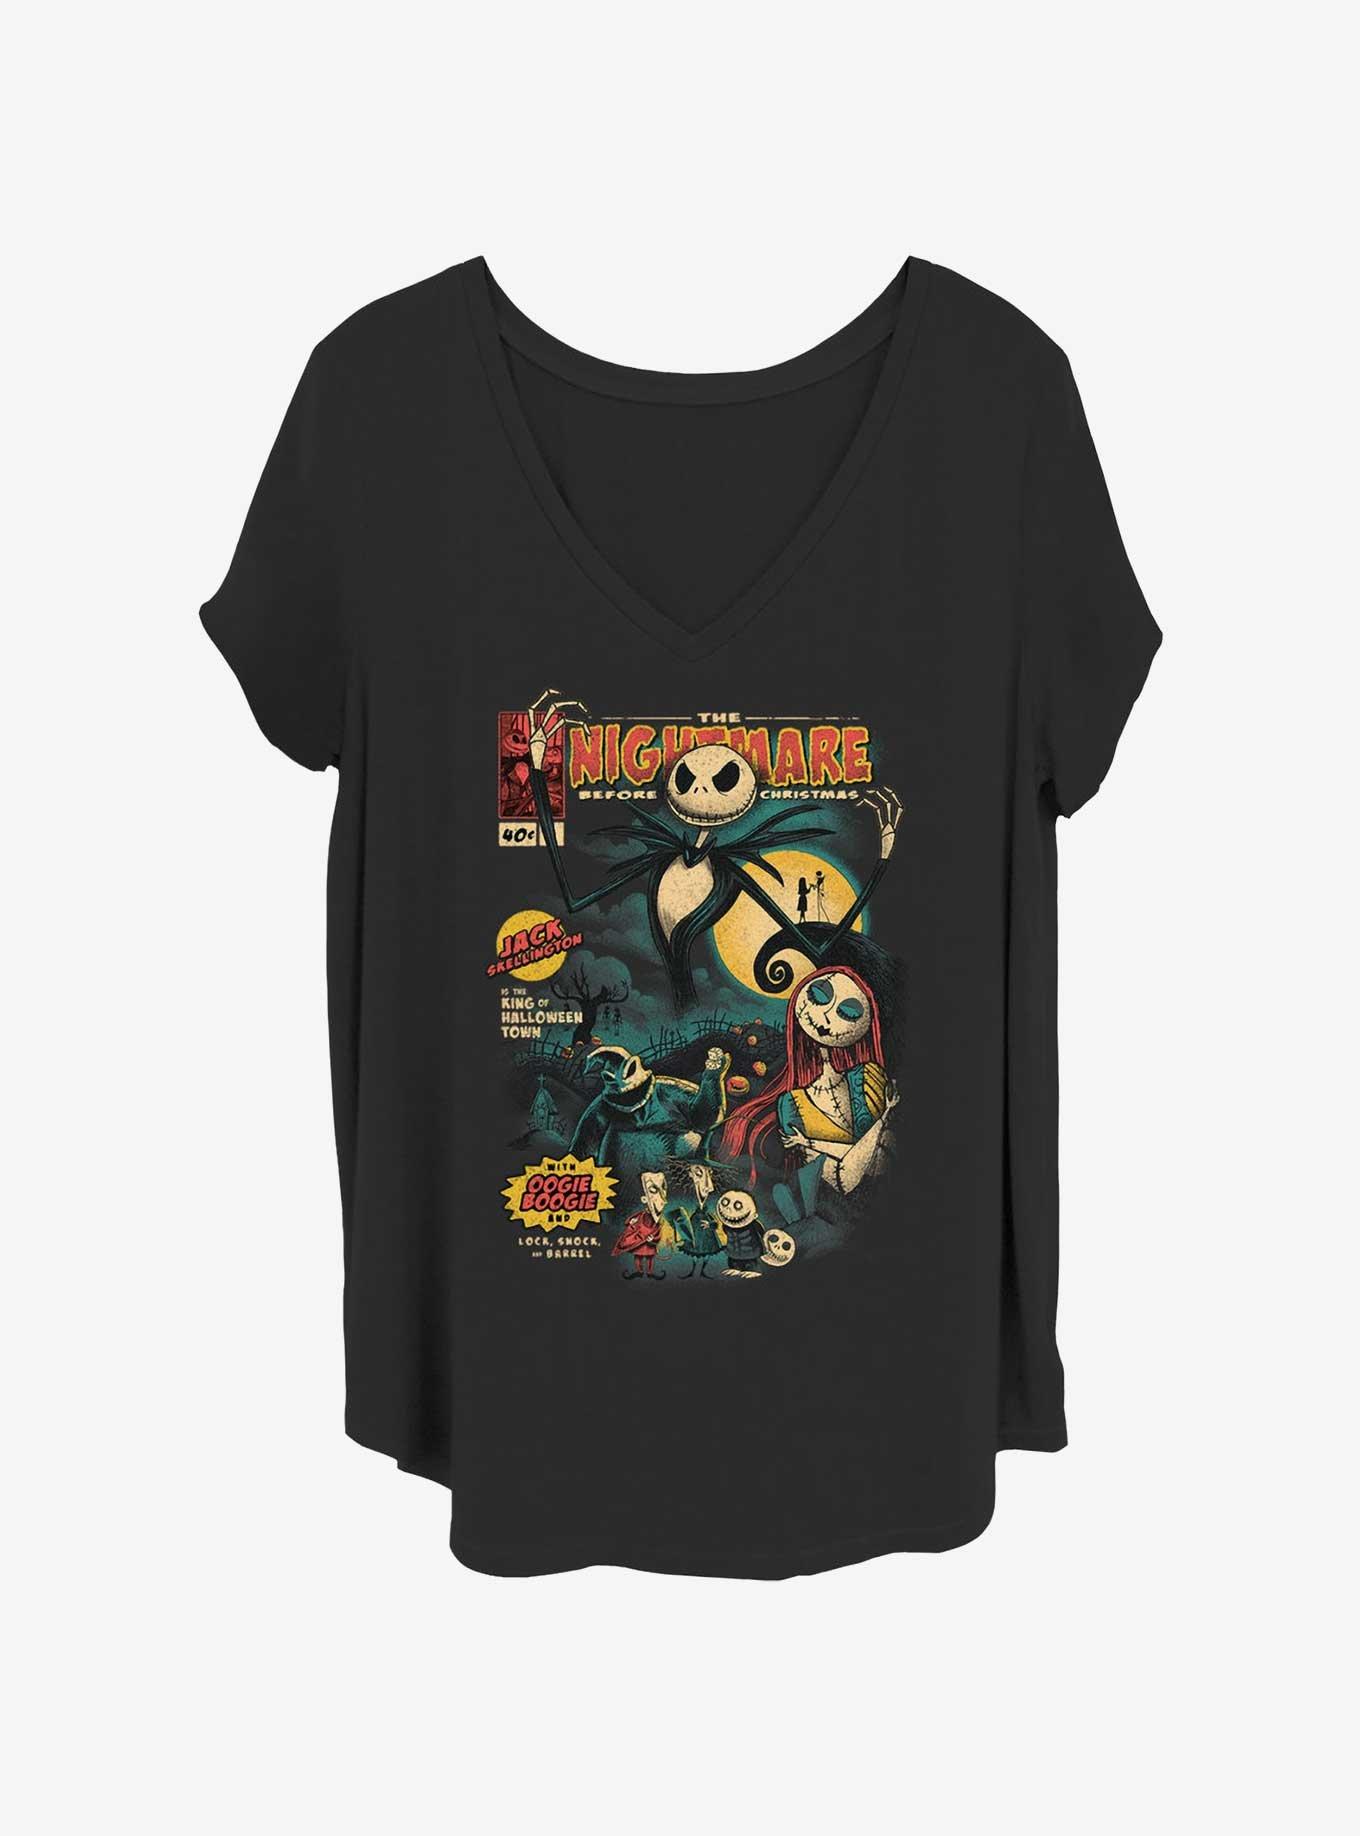 Disney The Nightmare Before Christmas Comic Cover Girls T-Shirt Plus